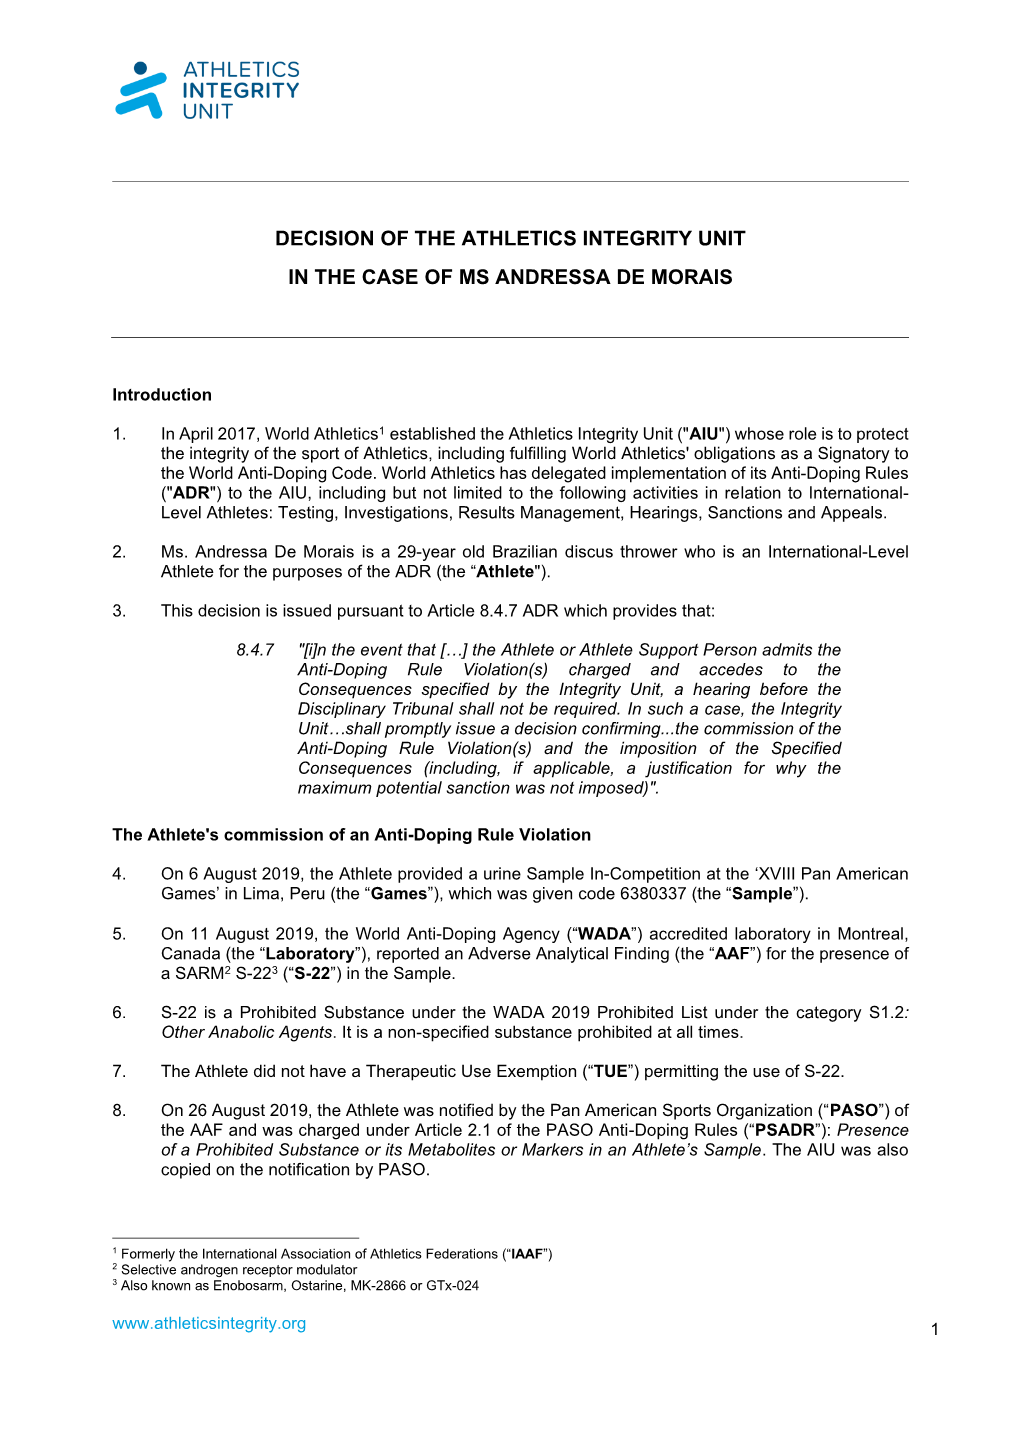 Decision of the Athletics Integrity Unit in the Case of Ms Andressa De Morais